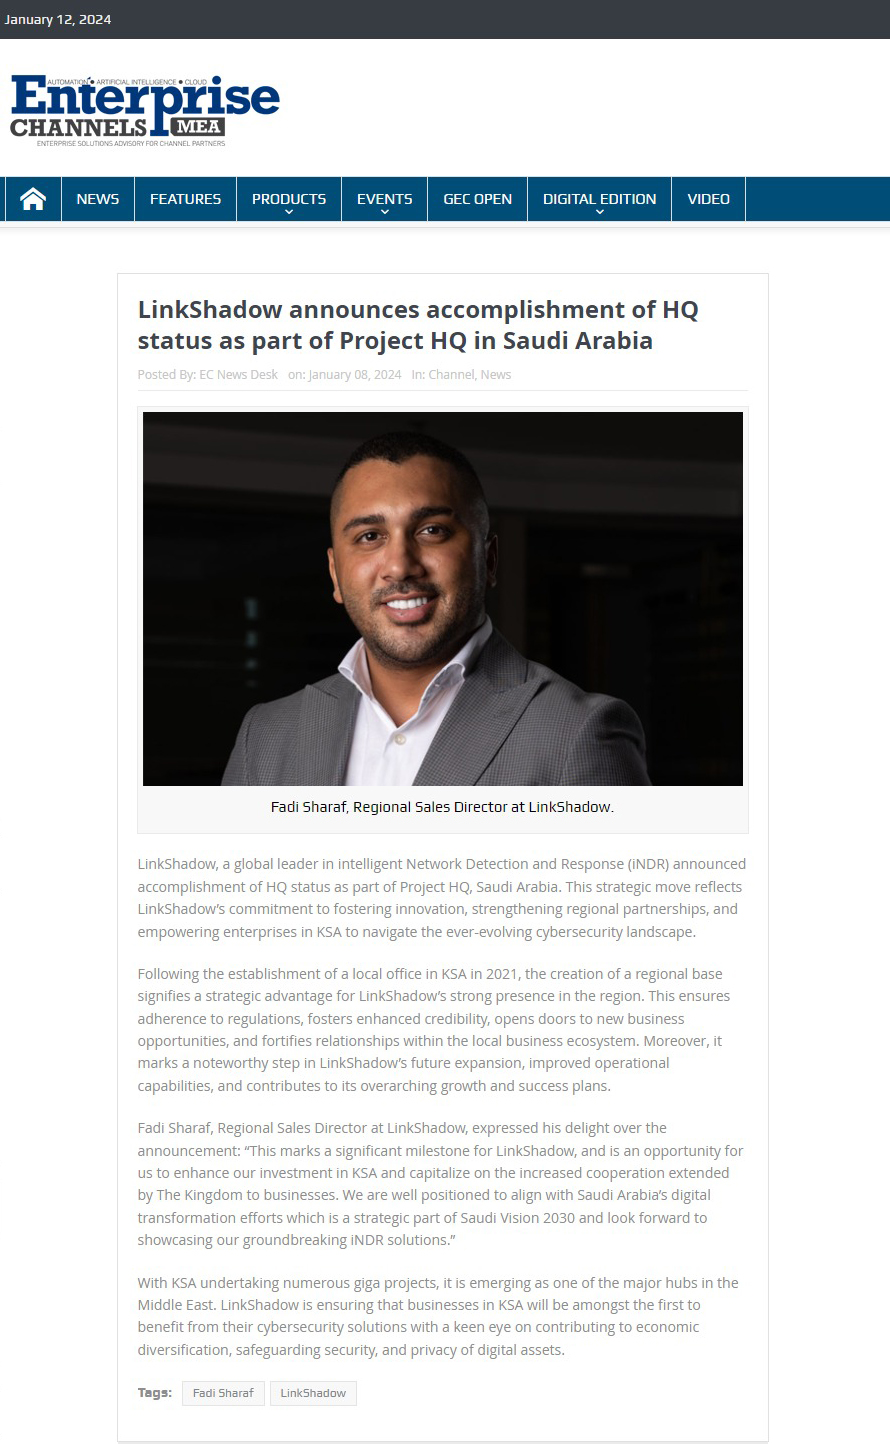 LinkShadow Reinforces its Commitment to Saudi Arabia